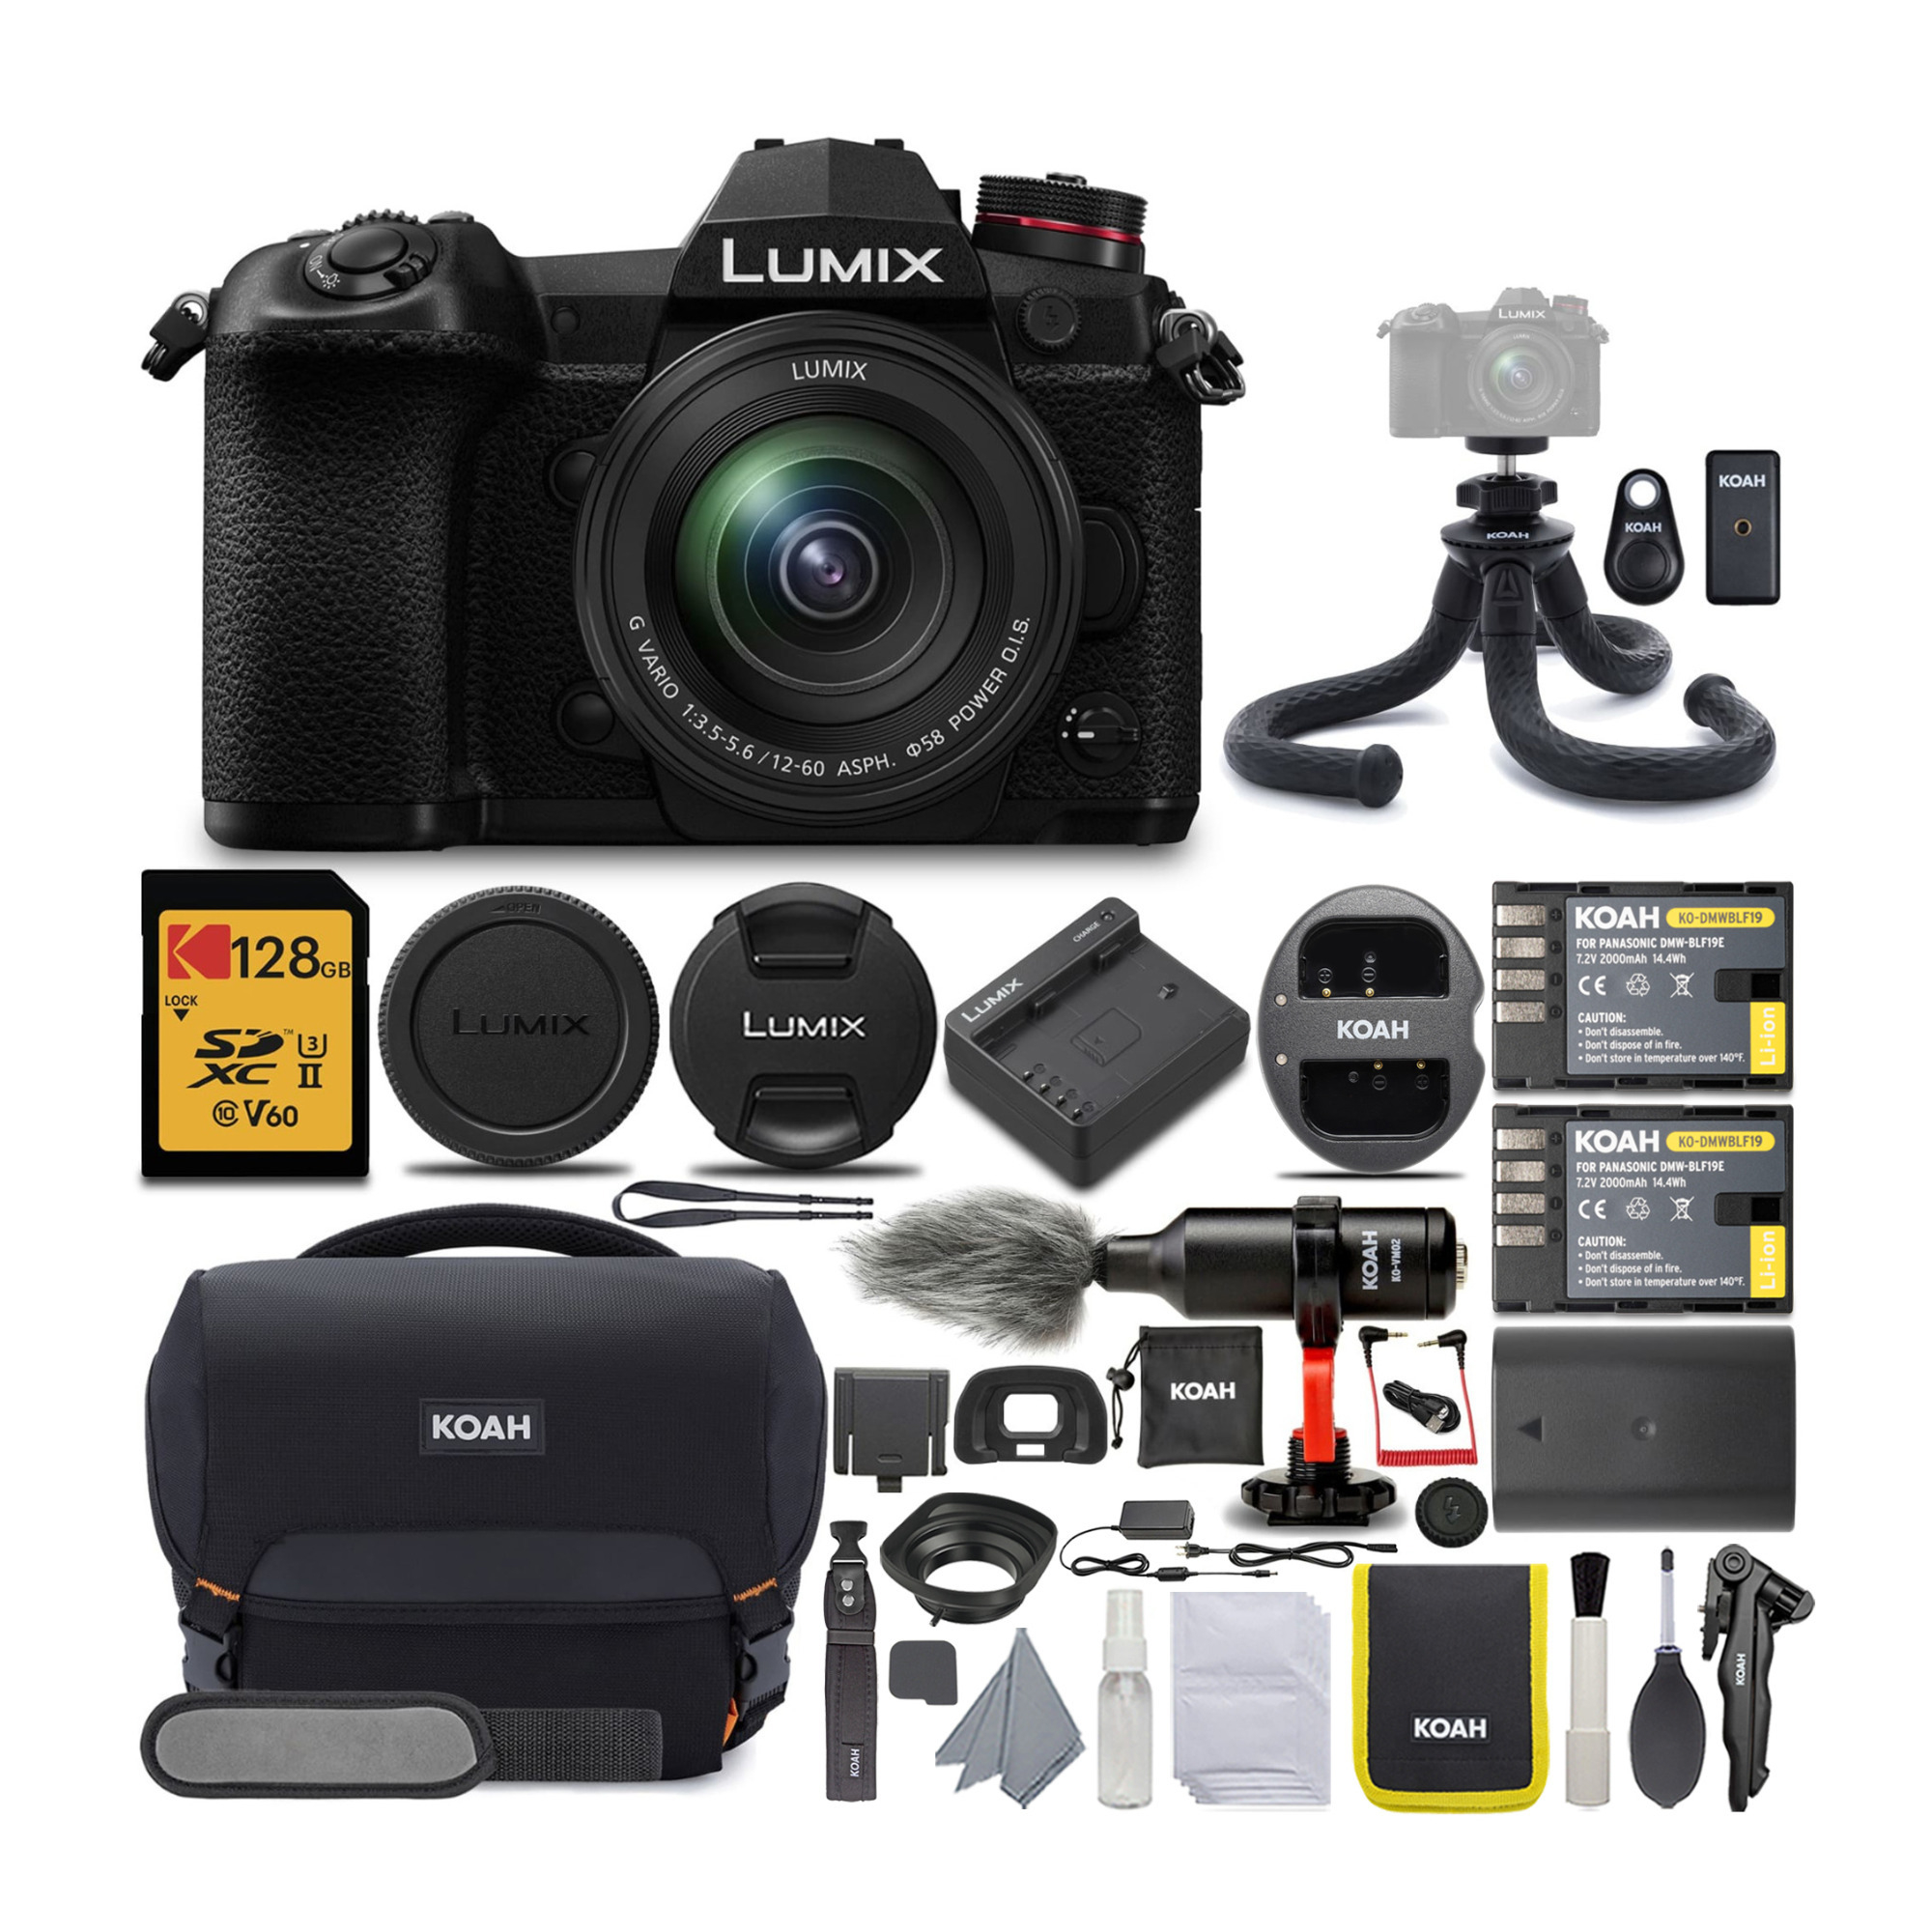 Panasonic LUMIX G9 Mirrorless Camera with LUMIX G Vario 12-60mm Camera Lens and KOAH Pro Accessory Bundle in Black